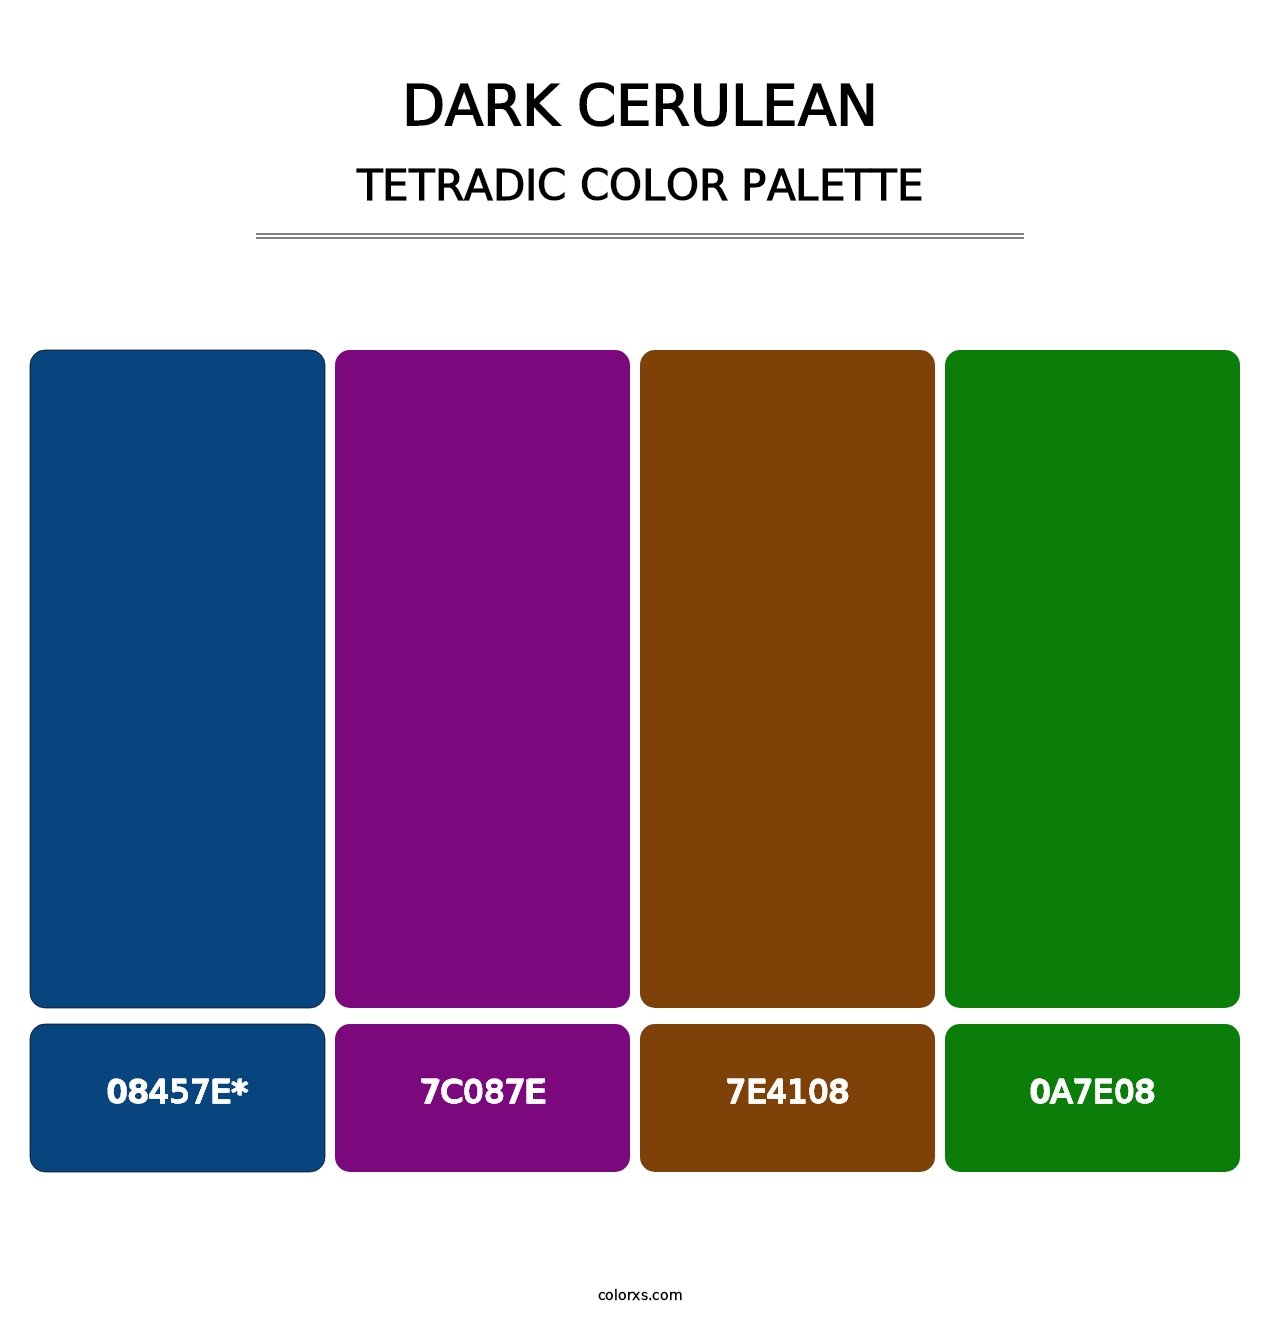 Dark Cerulean - Tetradic Color Palette